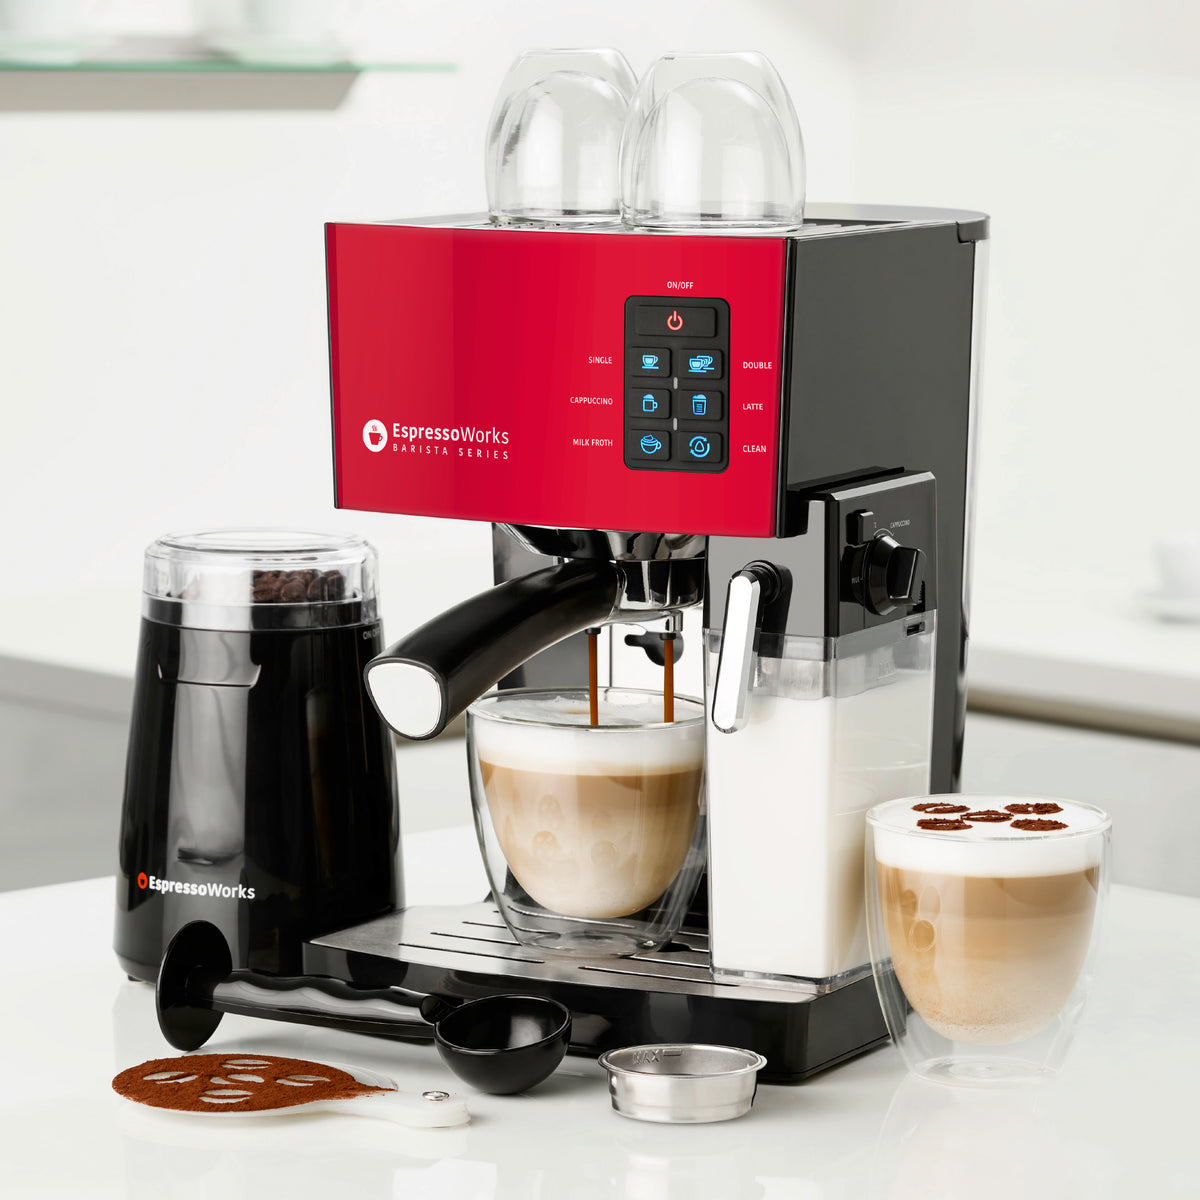 EspressoWorks 10-Piece Coffee and Espresso Machine Set - Red